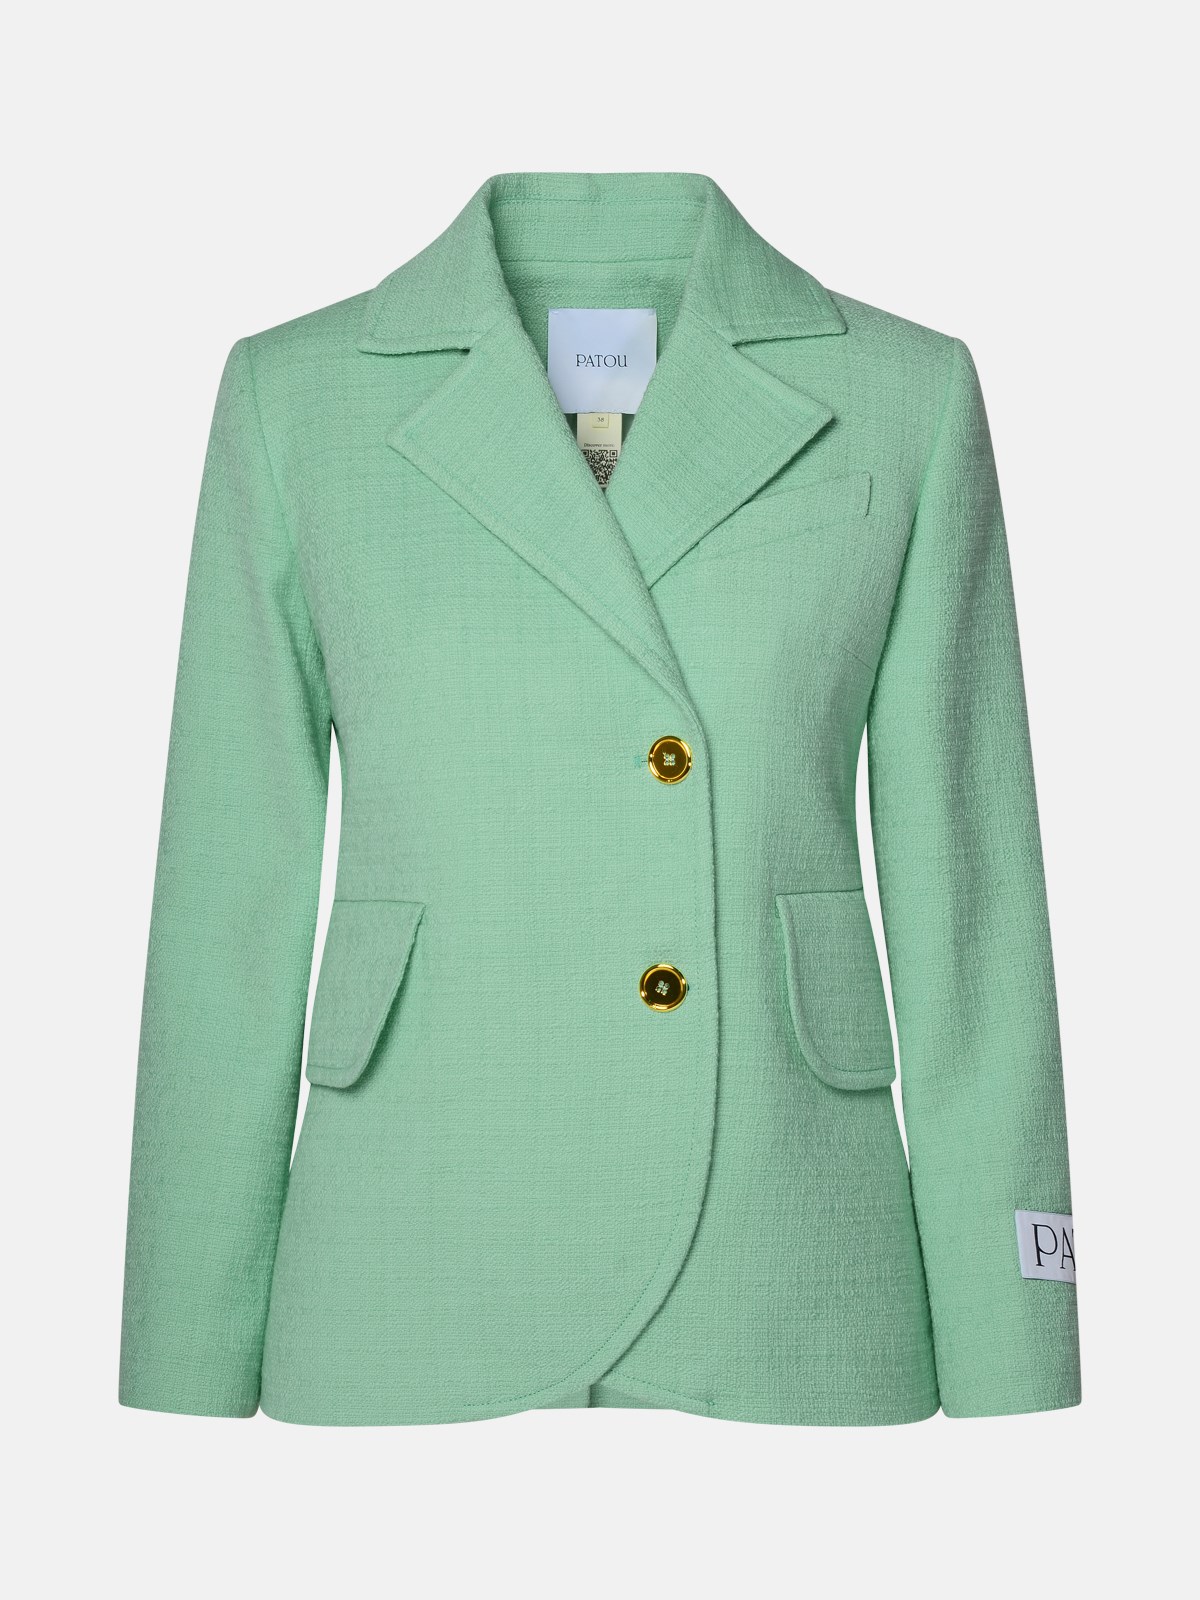 Patou Mint Cotton Blend Jacket In Green